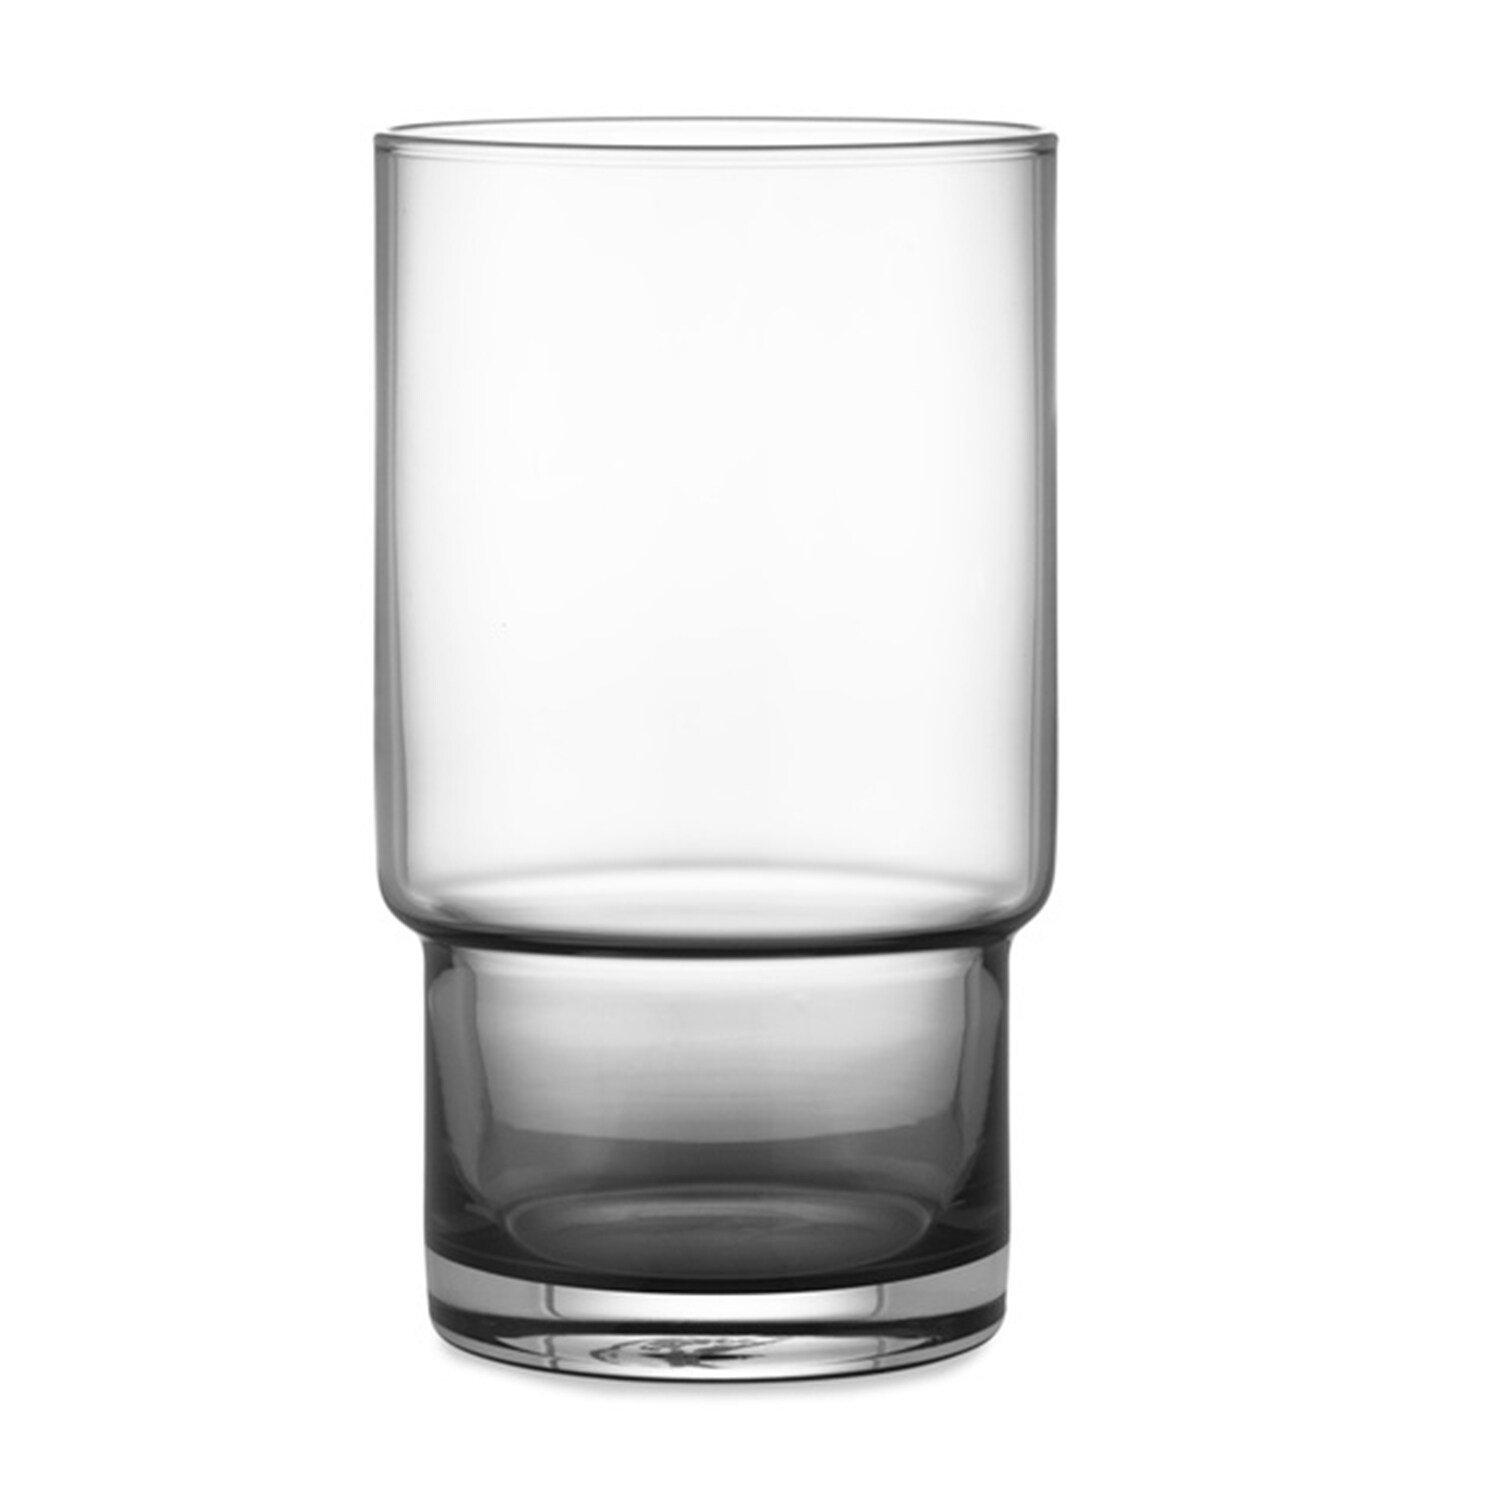 https://royaldesign.com/image/10/normann-copenhagen-fit-drinking-glass-8